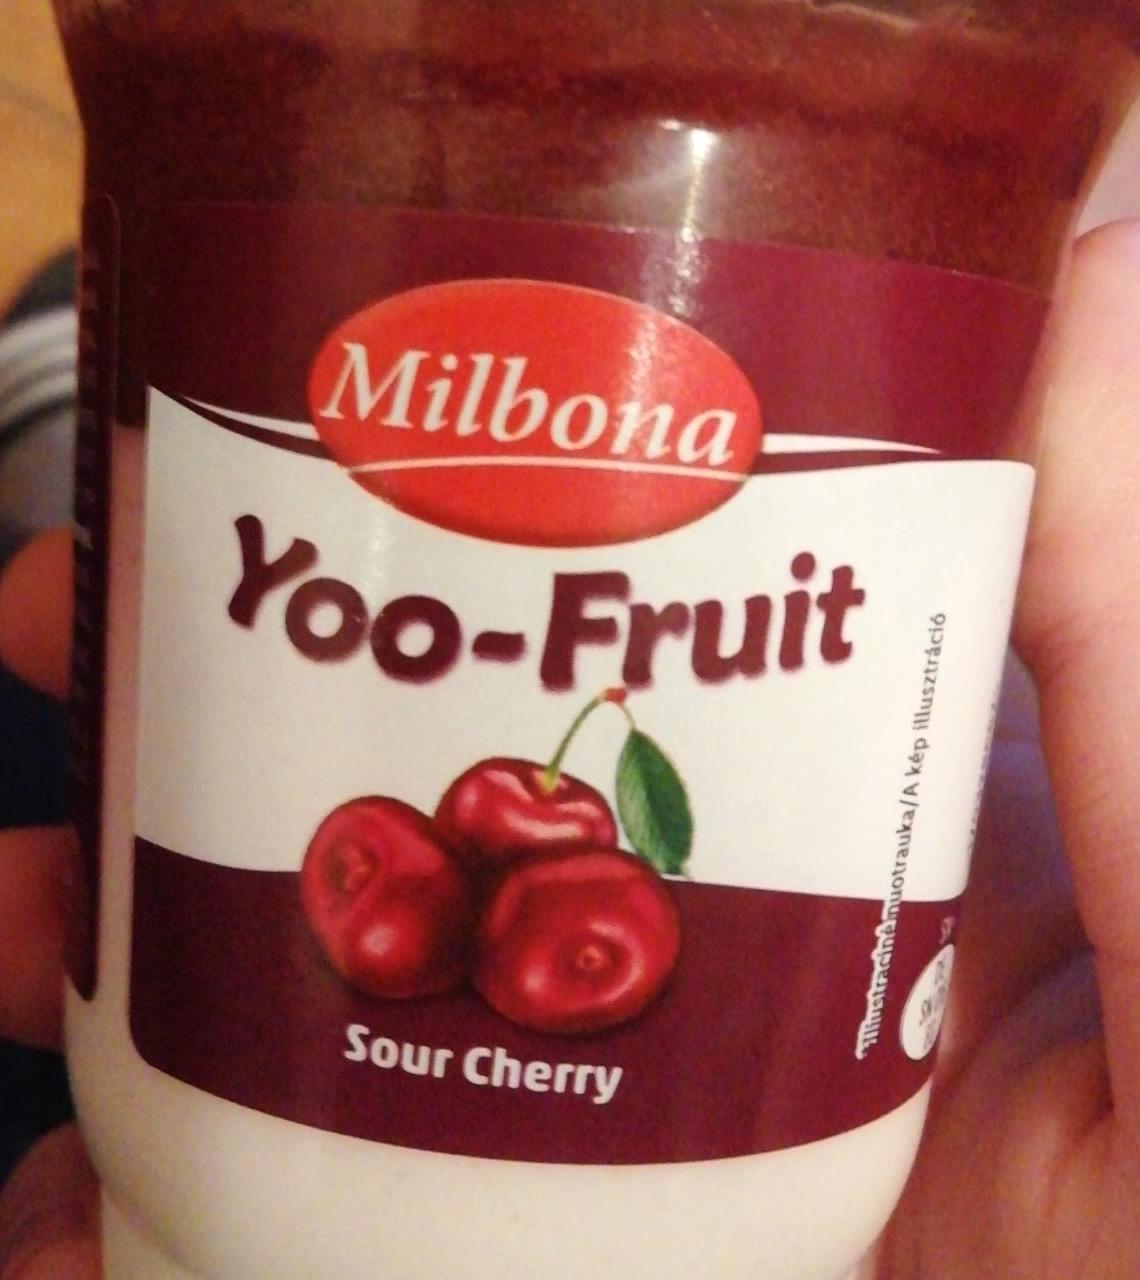 Képek - Yoo-fruit Sour cherry Milbona